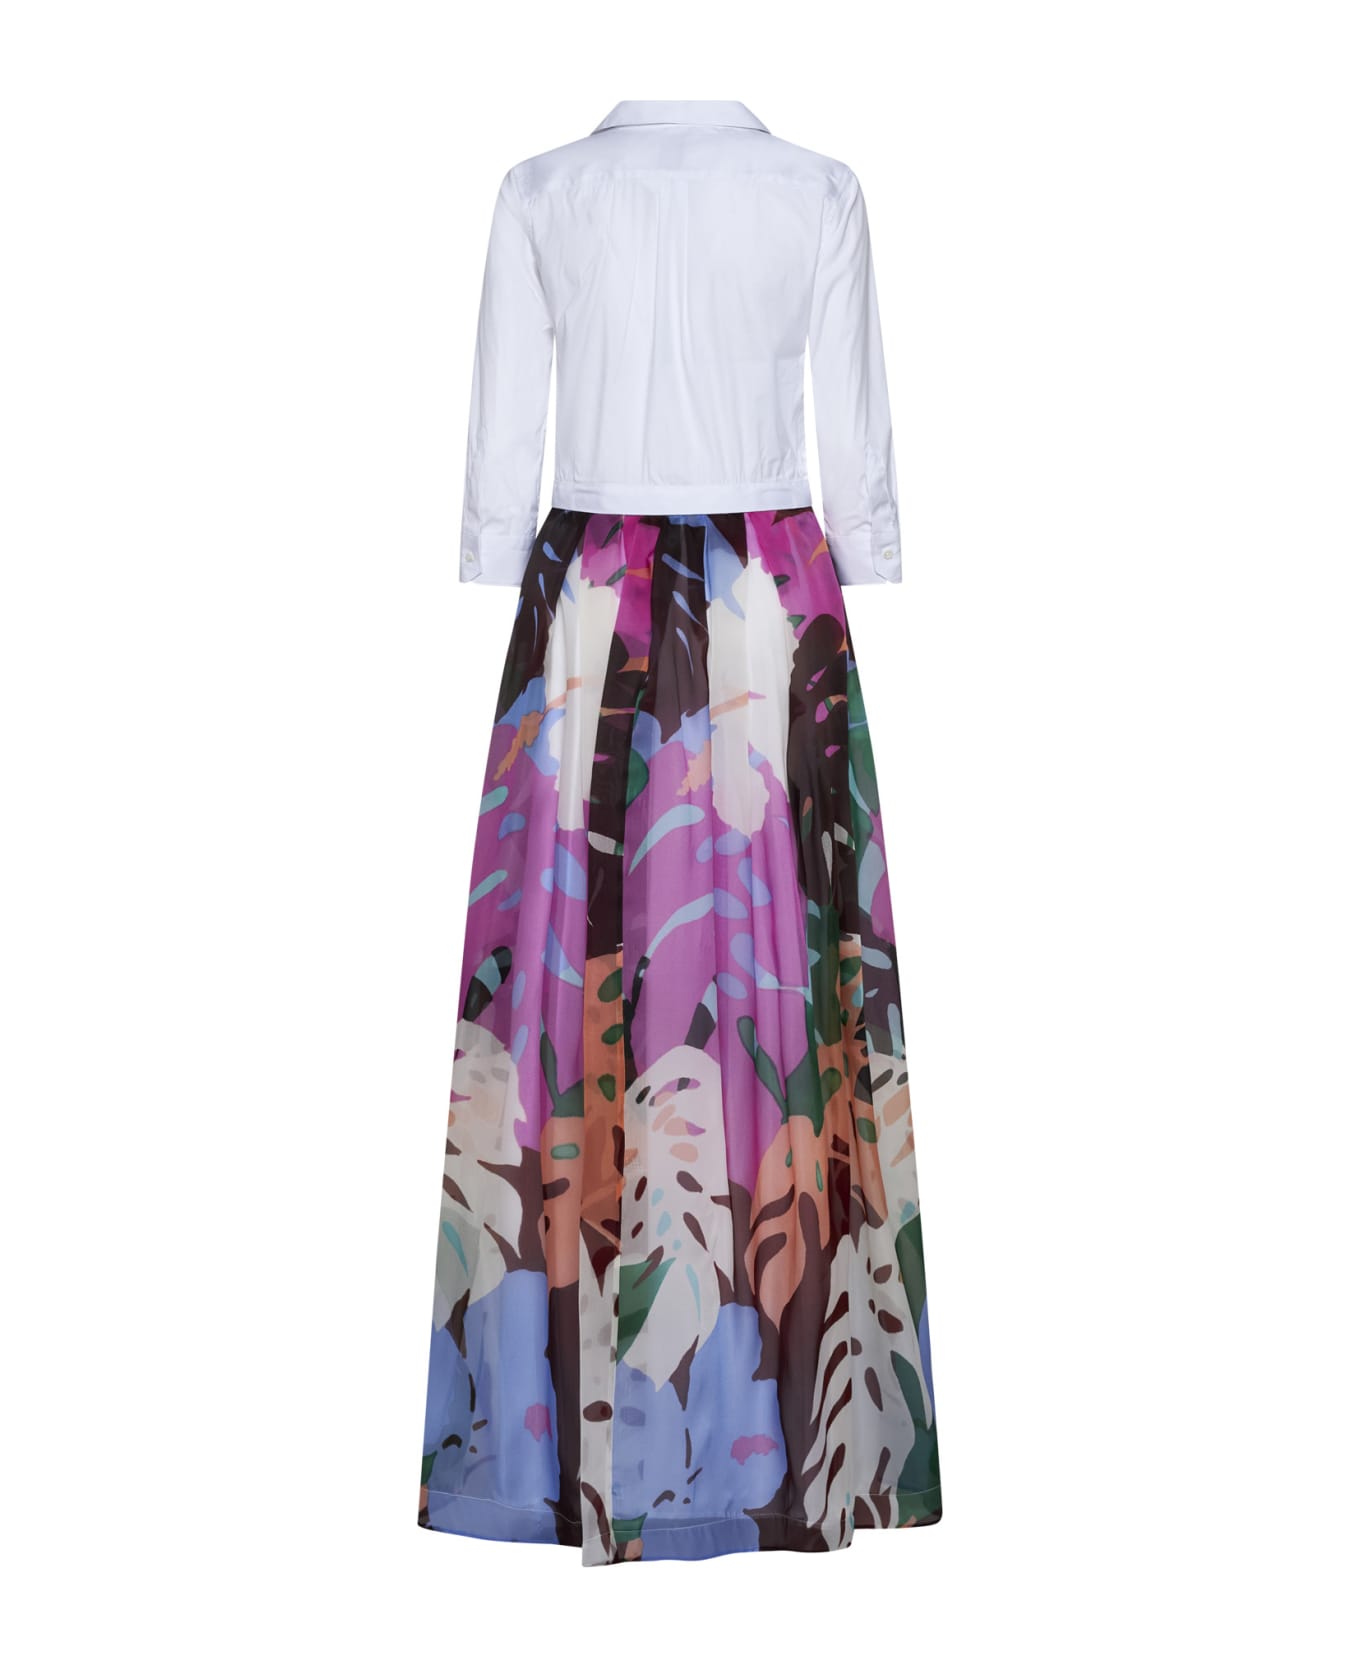 Sara Roka Dress - Bianco multicolor スカート